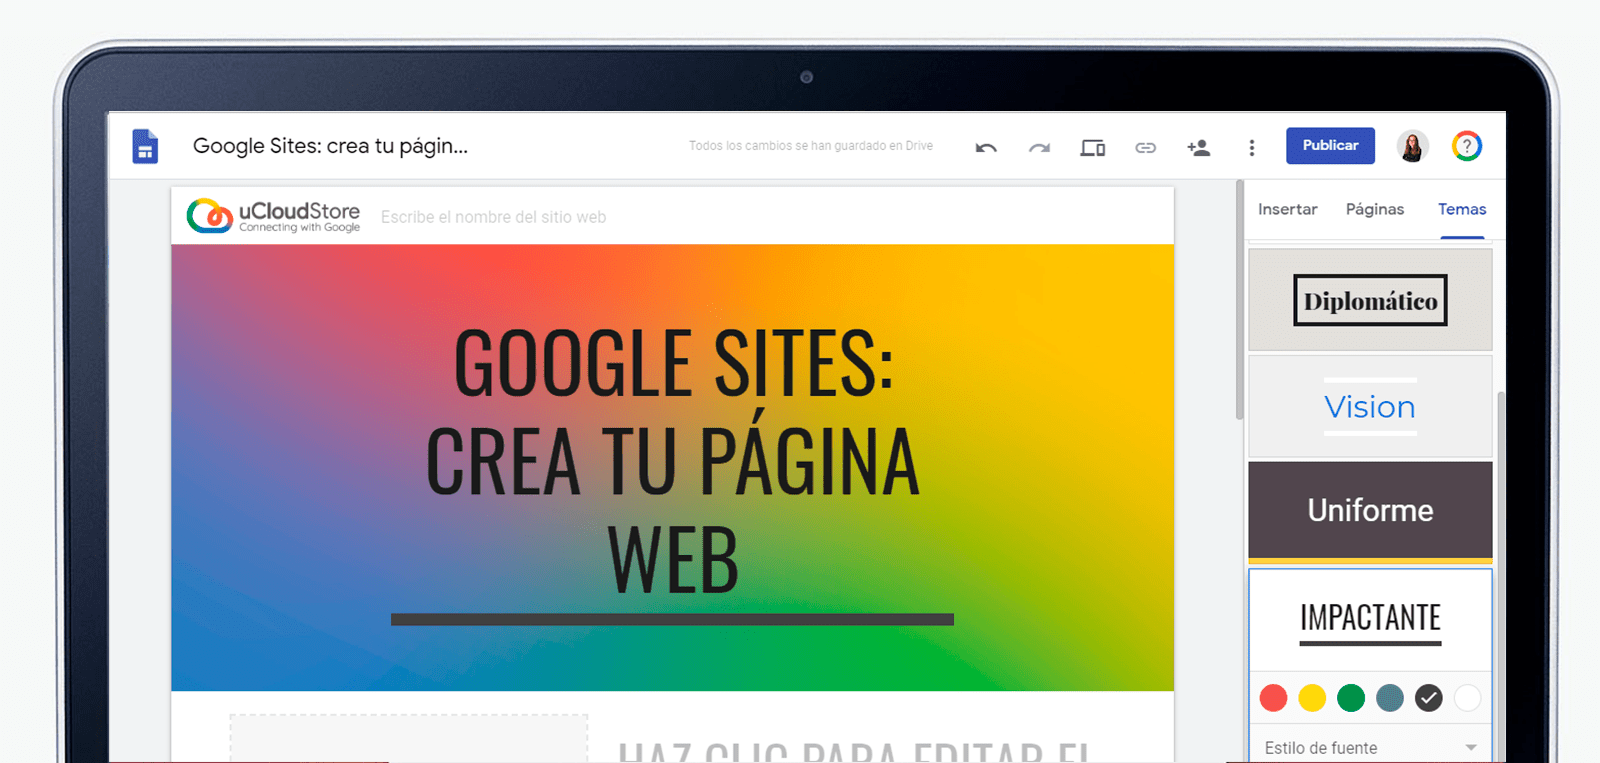 Image of Google Sites